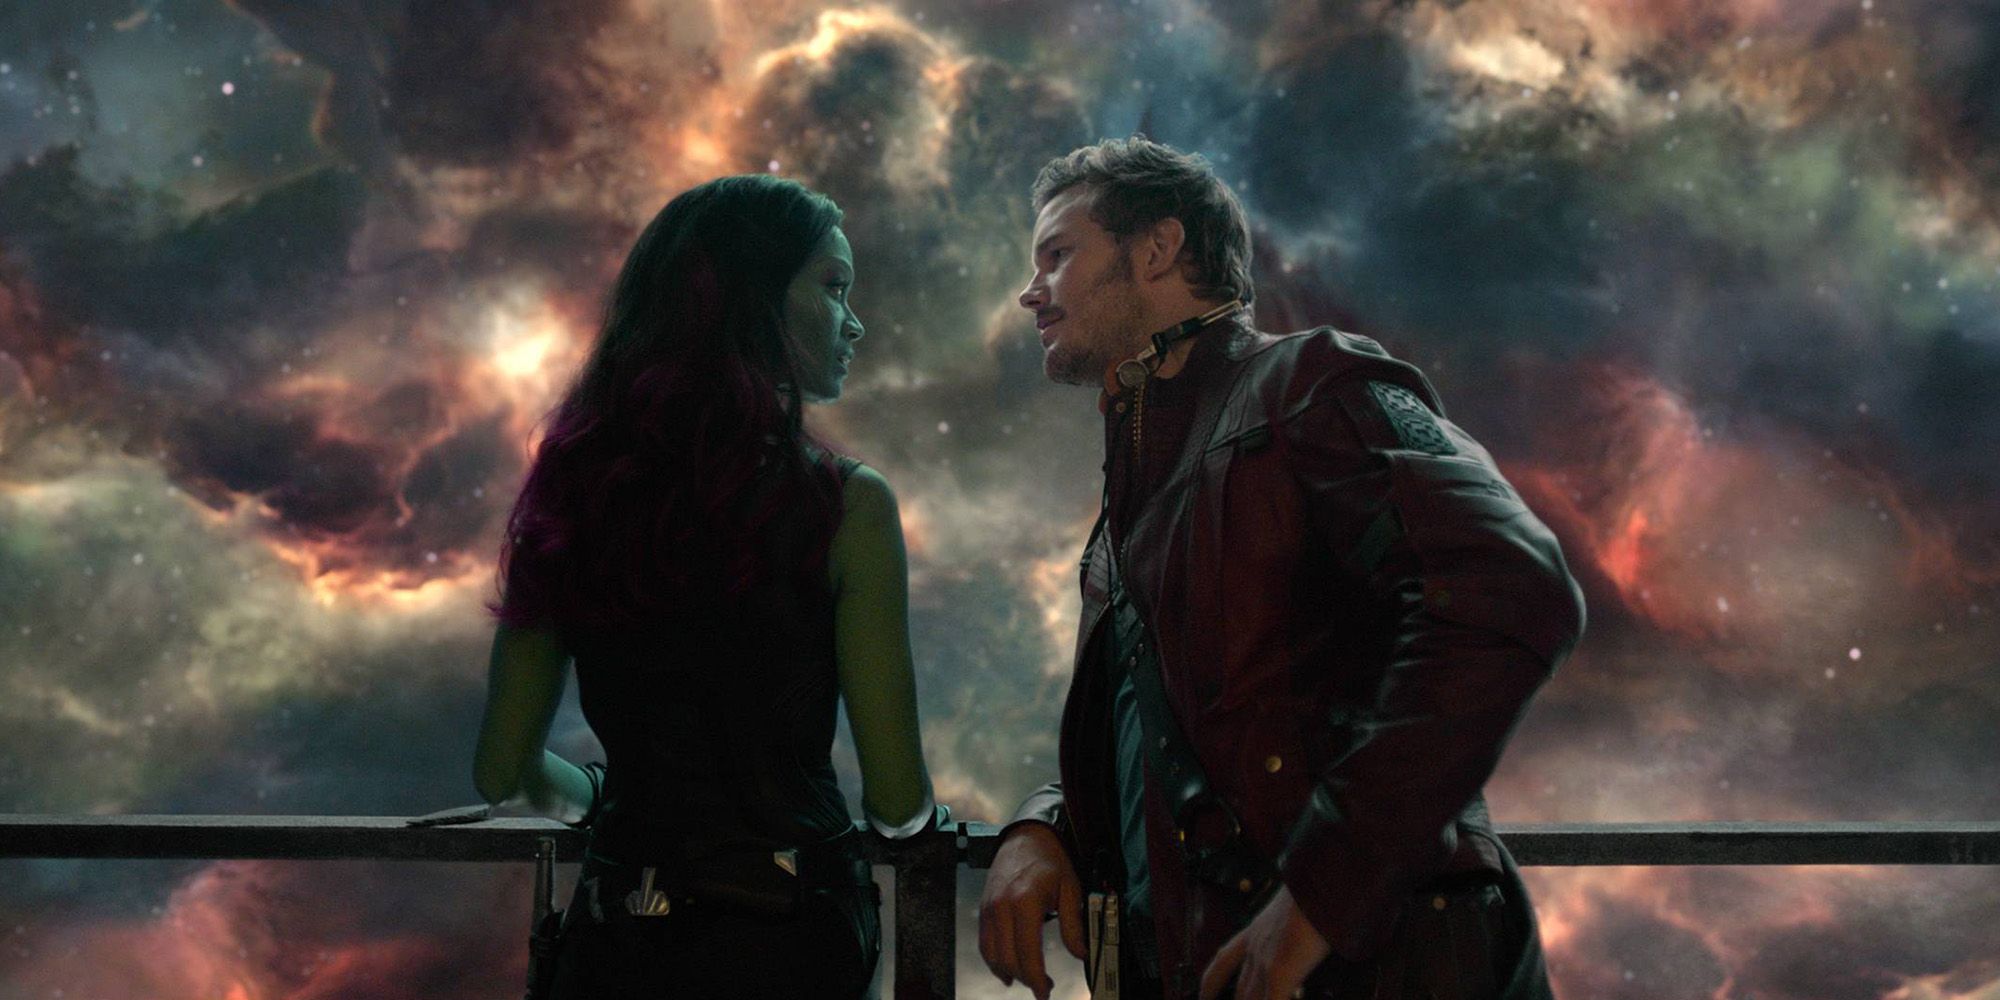 Chris Pratt as Star-Lord and Zoe Saldana as Gamora in Guardians of the Galaxy